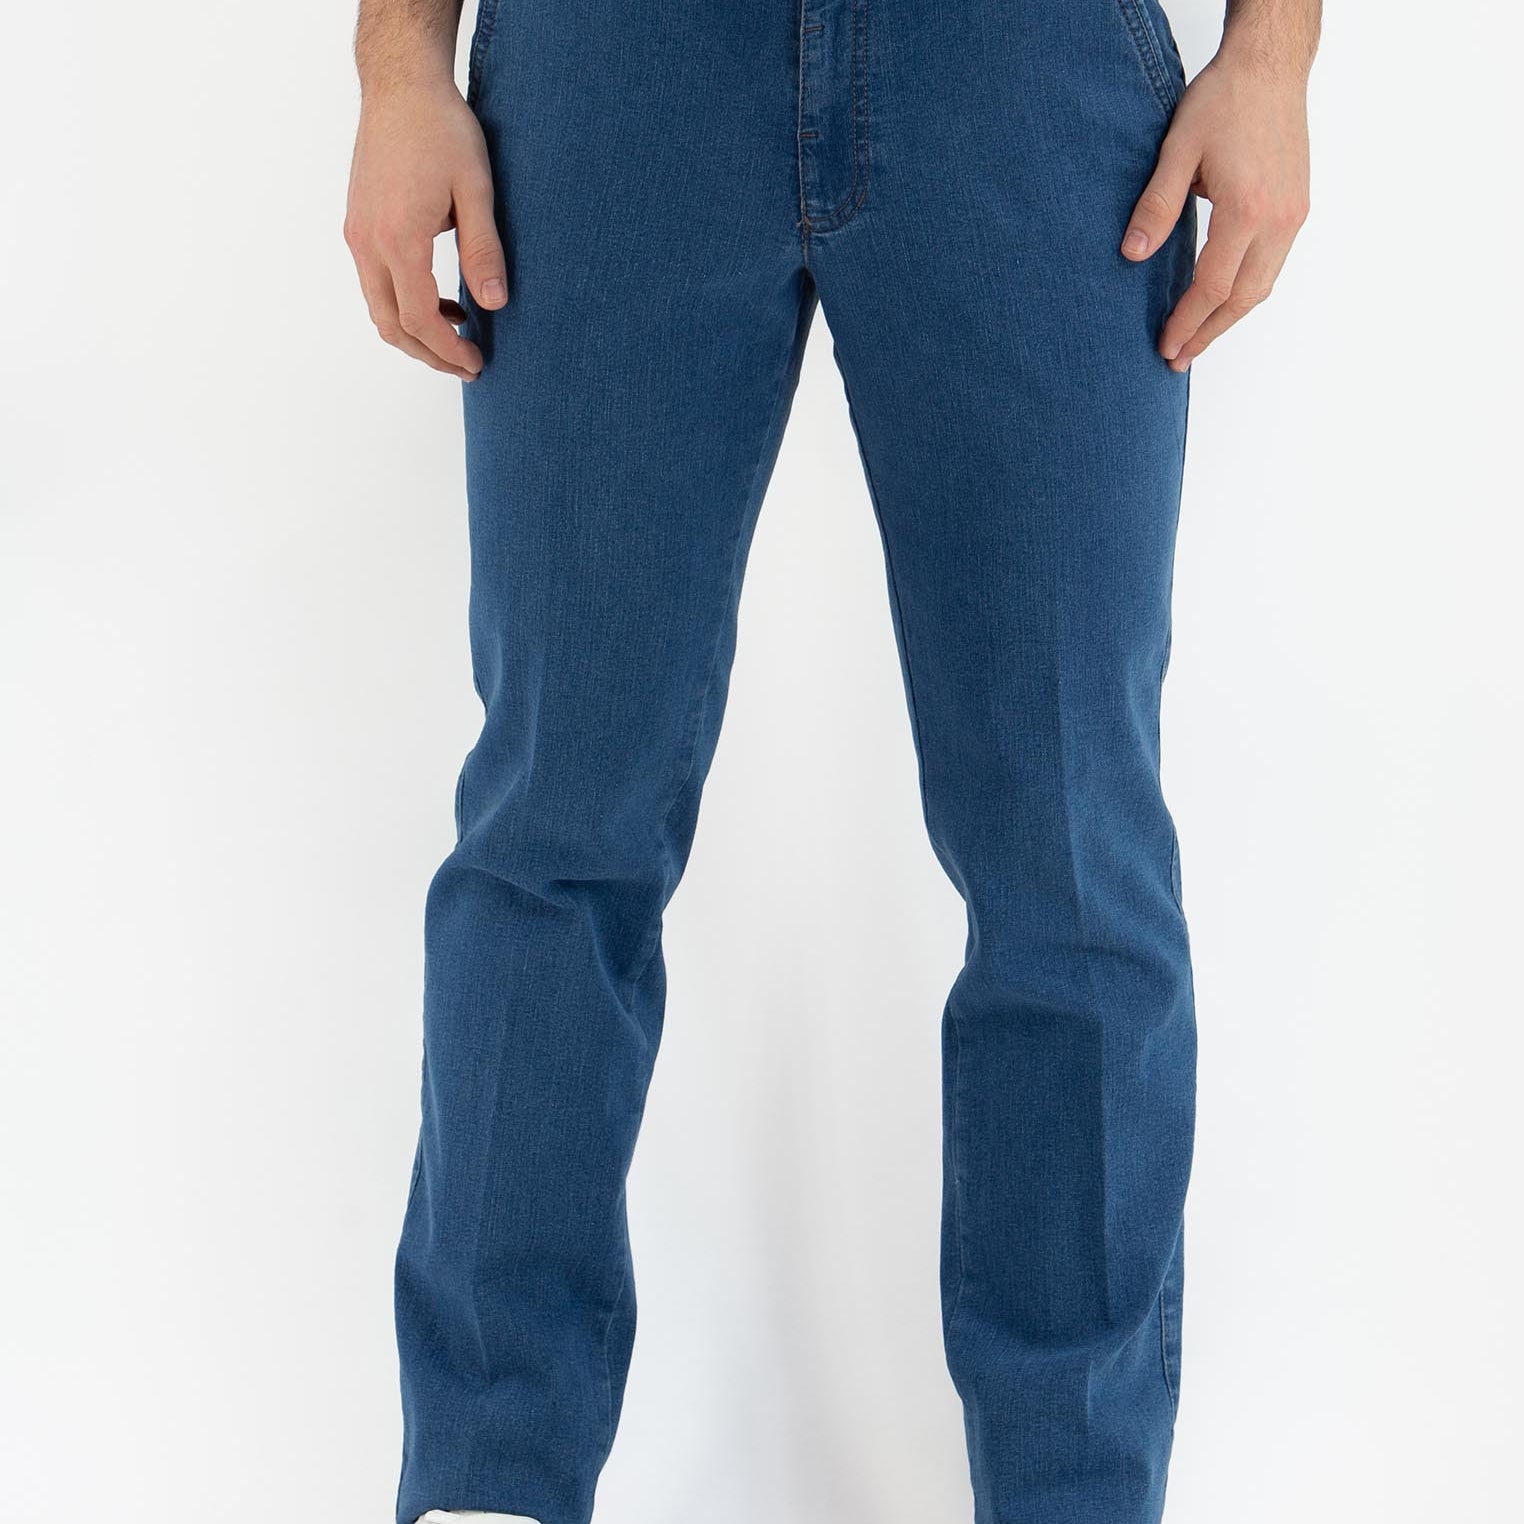 Pantalone Jeans LUIGI MORINI 8113 MANNHEIM